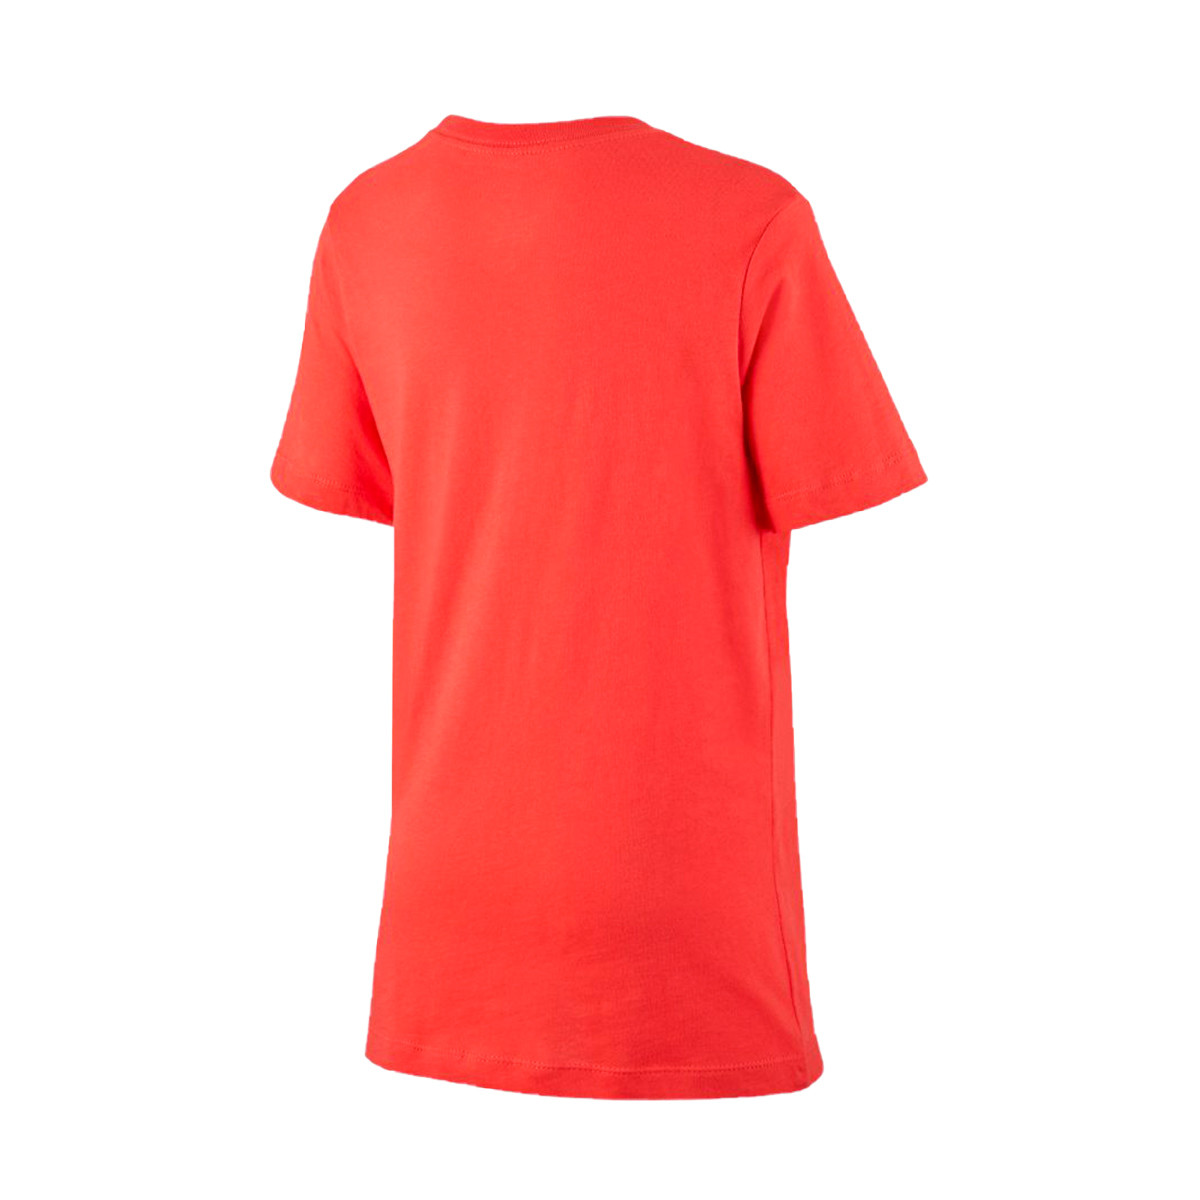 track red nike shirt